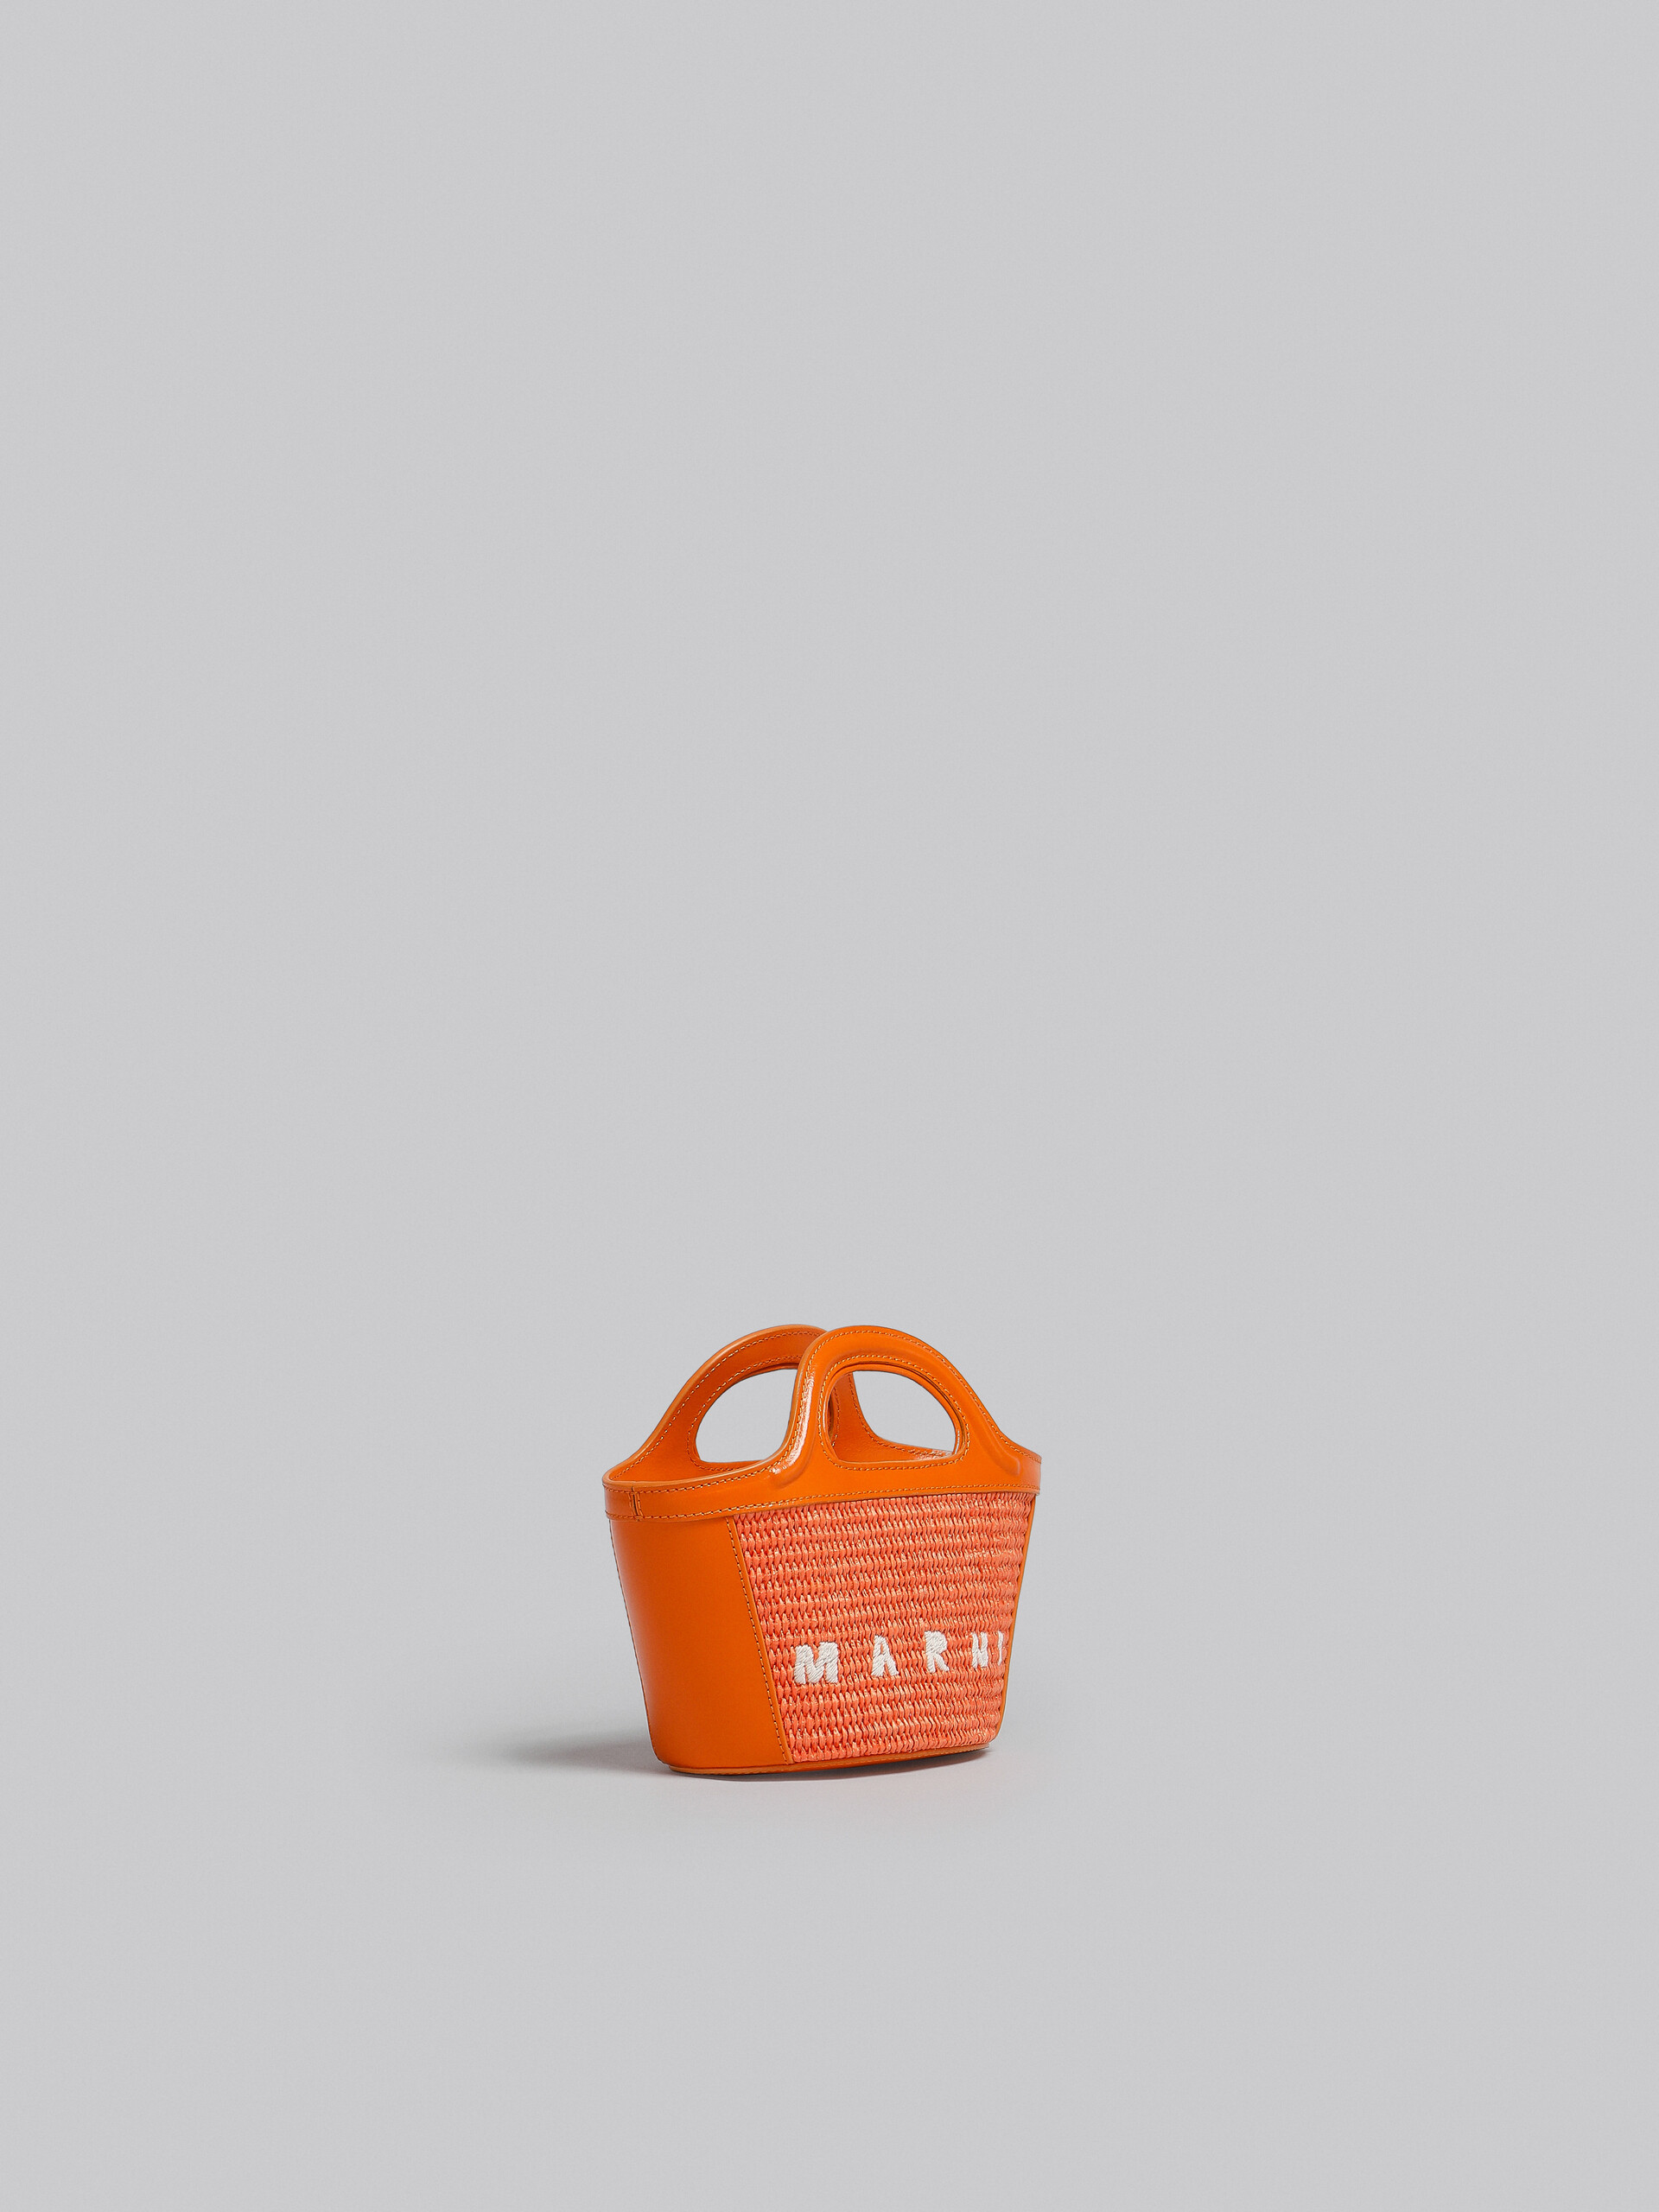 Tropicalia Micro Bag in orange leather and raffia - Handbags - Image 6